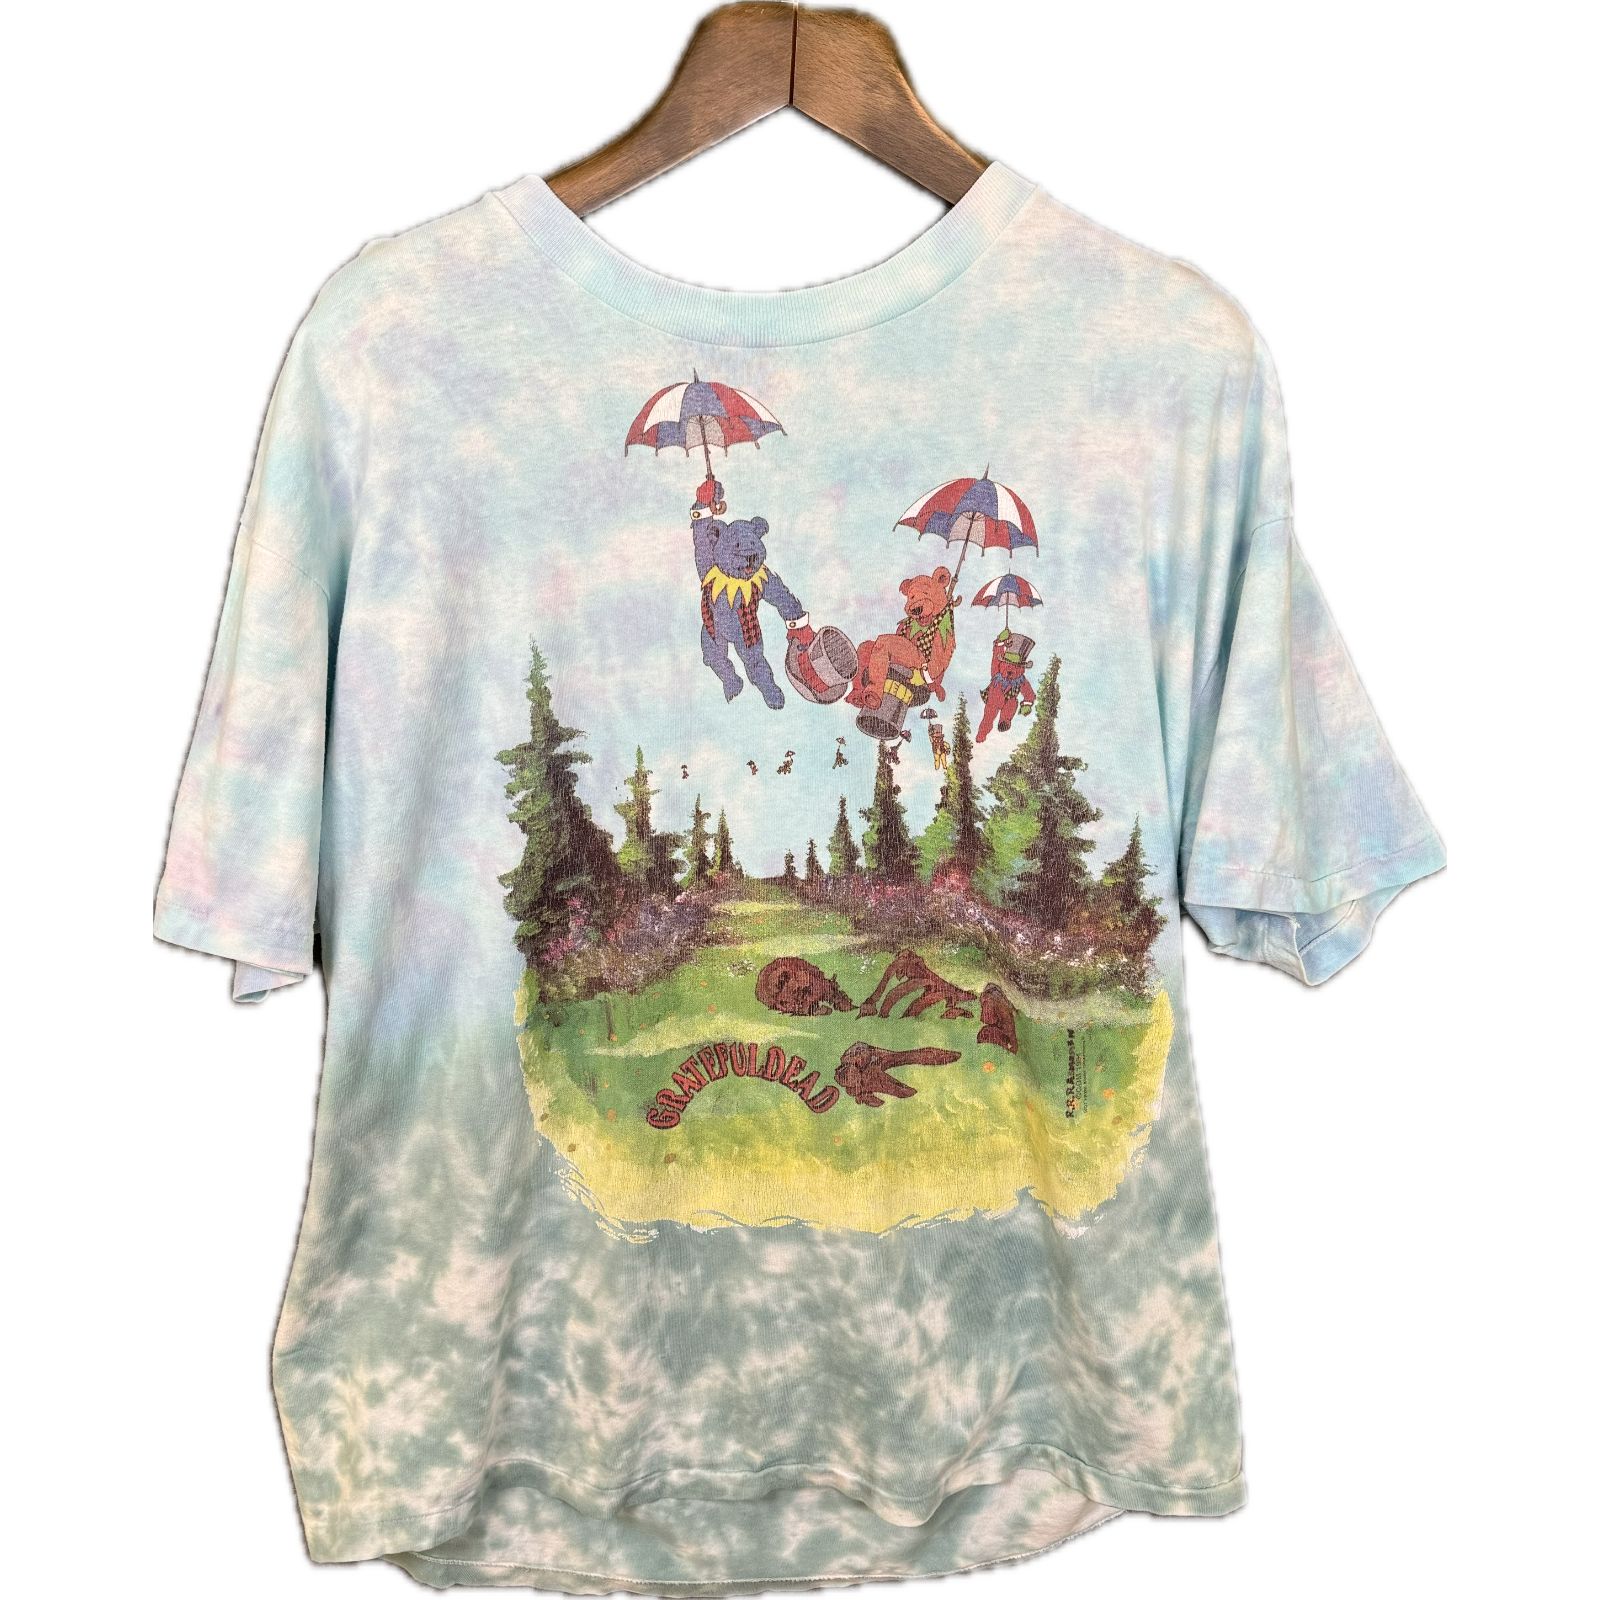 Grateful Dead Vintage 1994 Grateful Dead T Shirt Umbrella Bears GDM XL Size US XL / EU 56 / 4 - 1 Preview